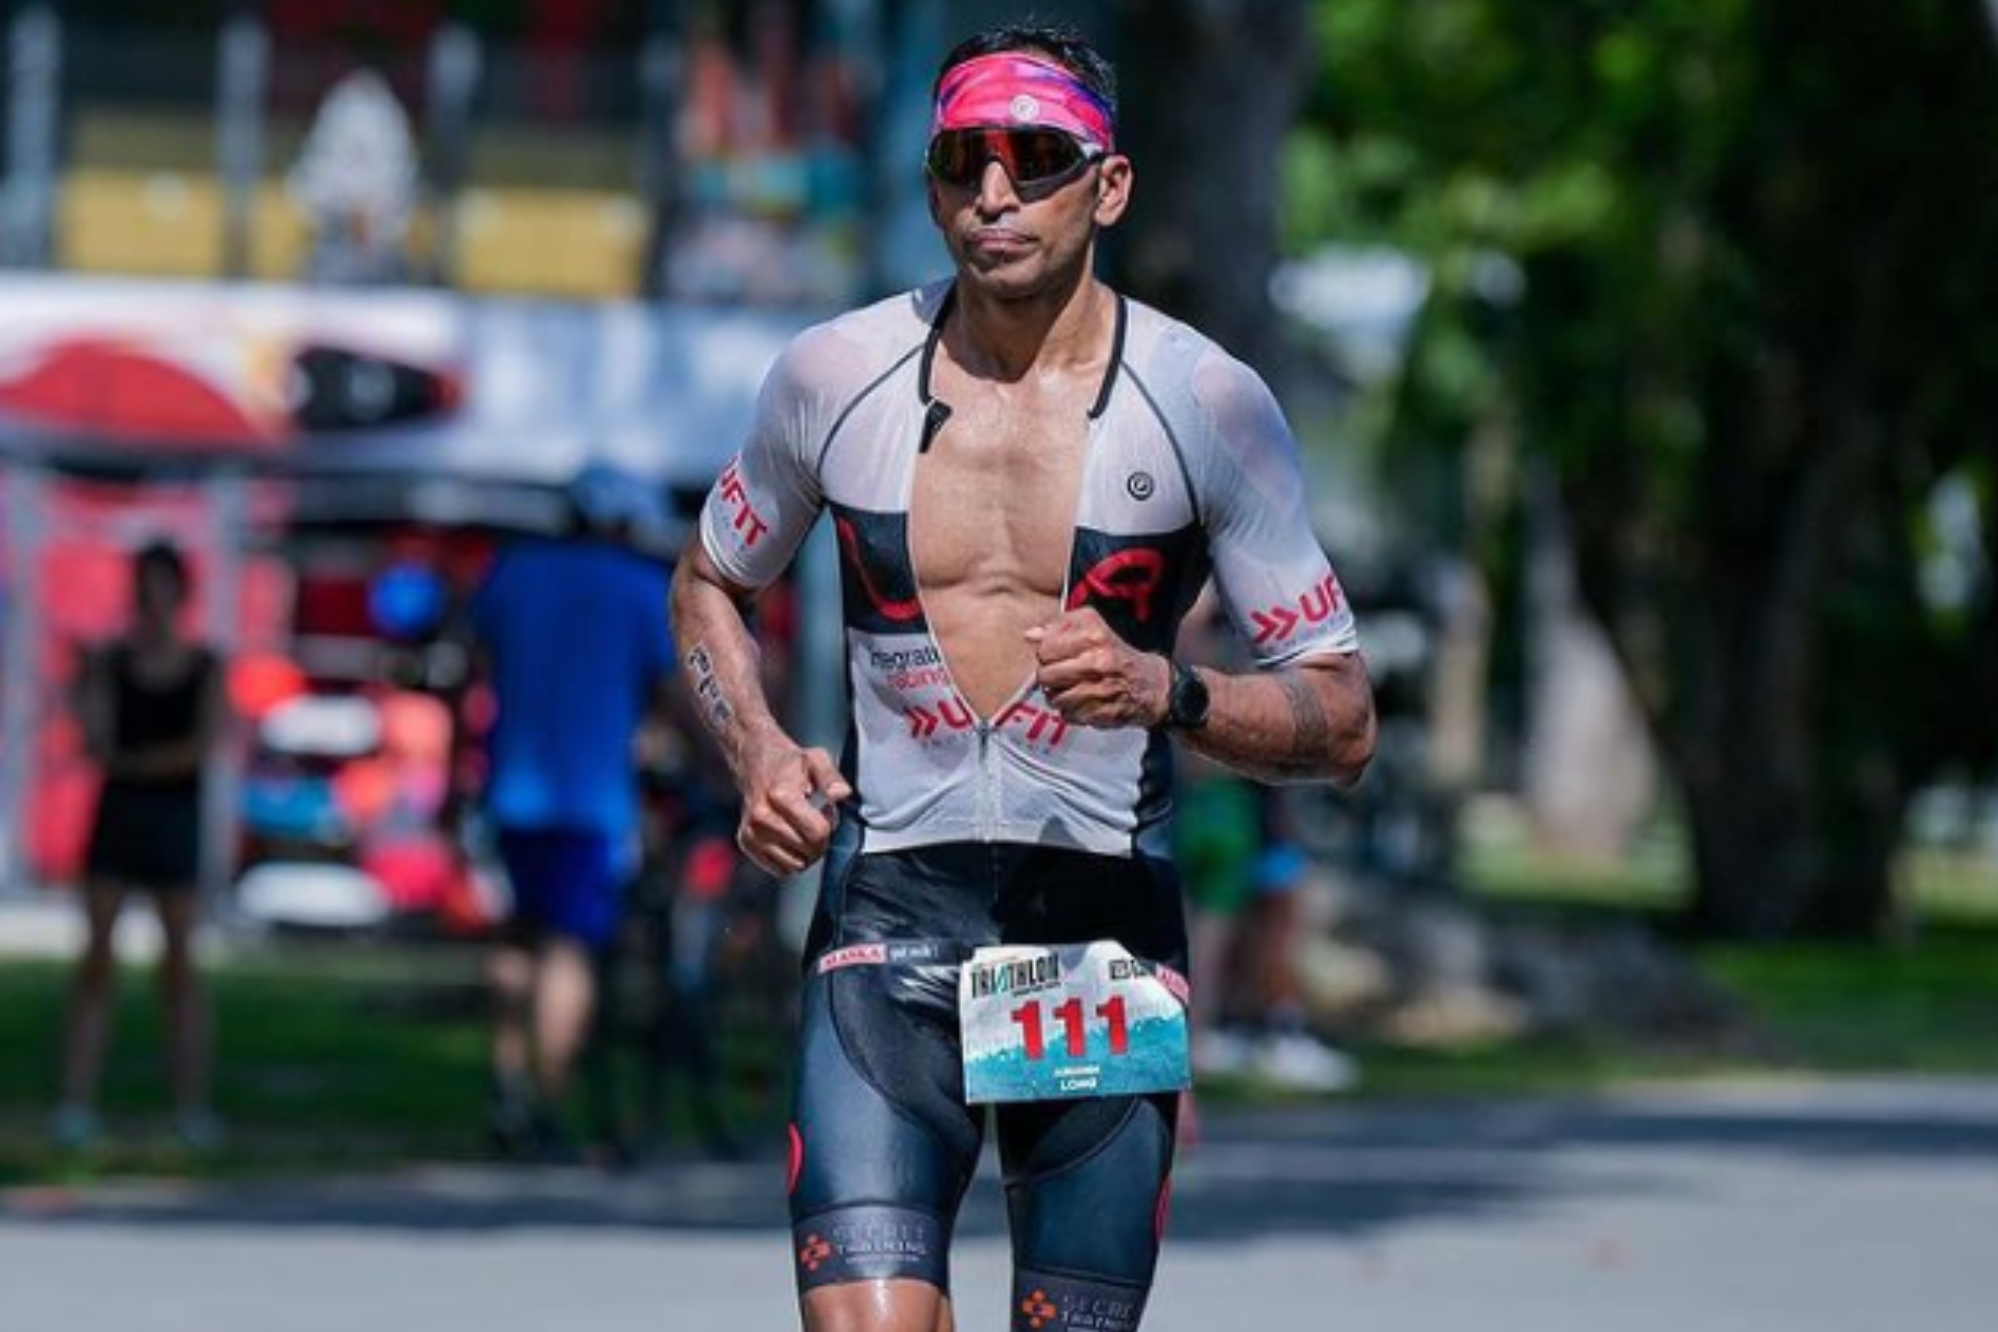 Arjun Kandikuppa: Continues his Triathlon Mission with Purpose